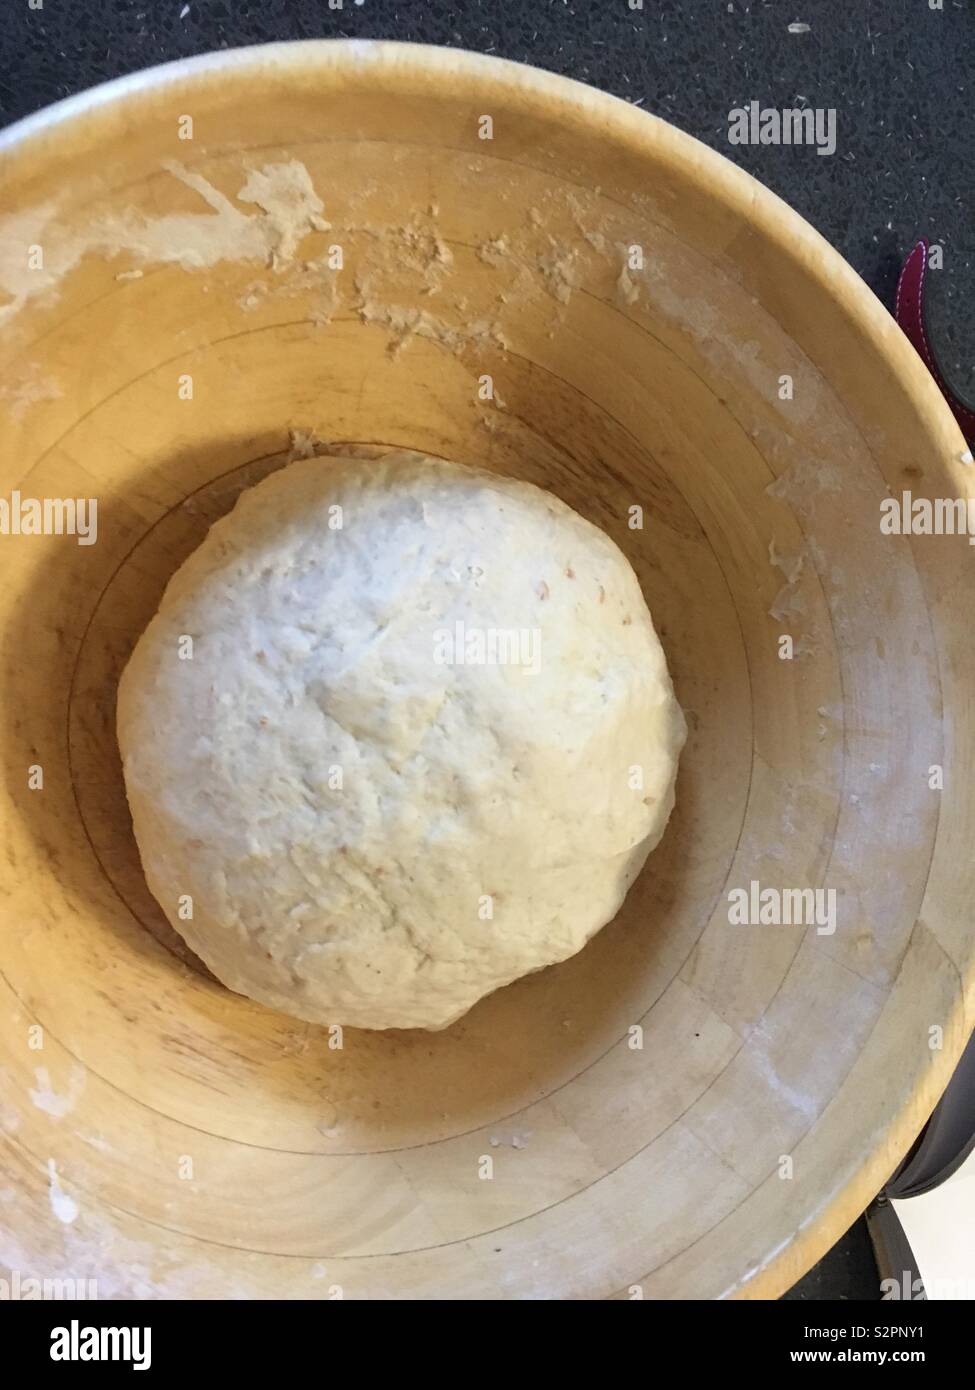 https://c8.alamy.com/comp/S2PNY1/bread-dough-in-a-bowl-S2PNY1.jpg